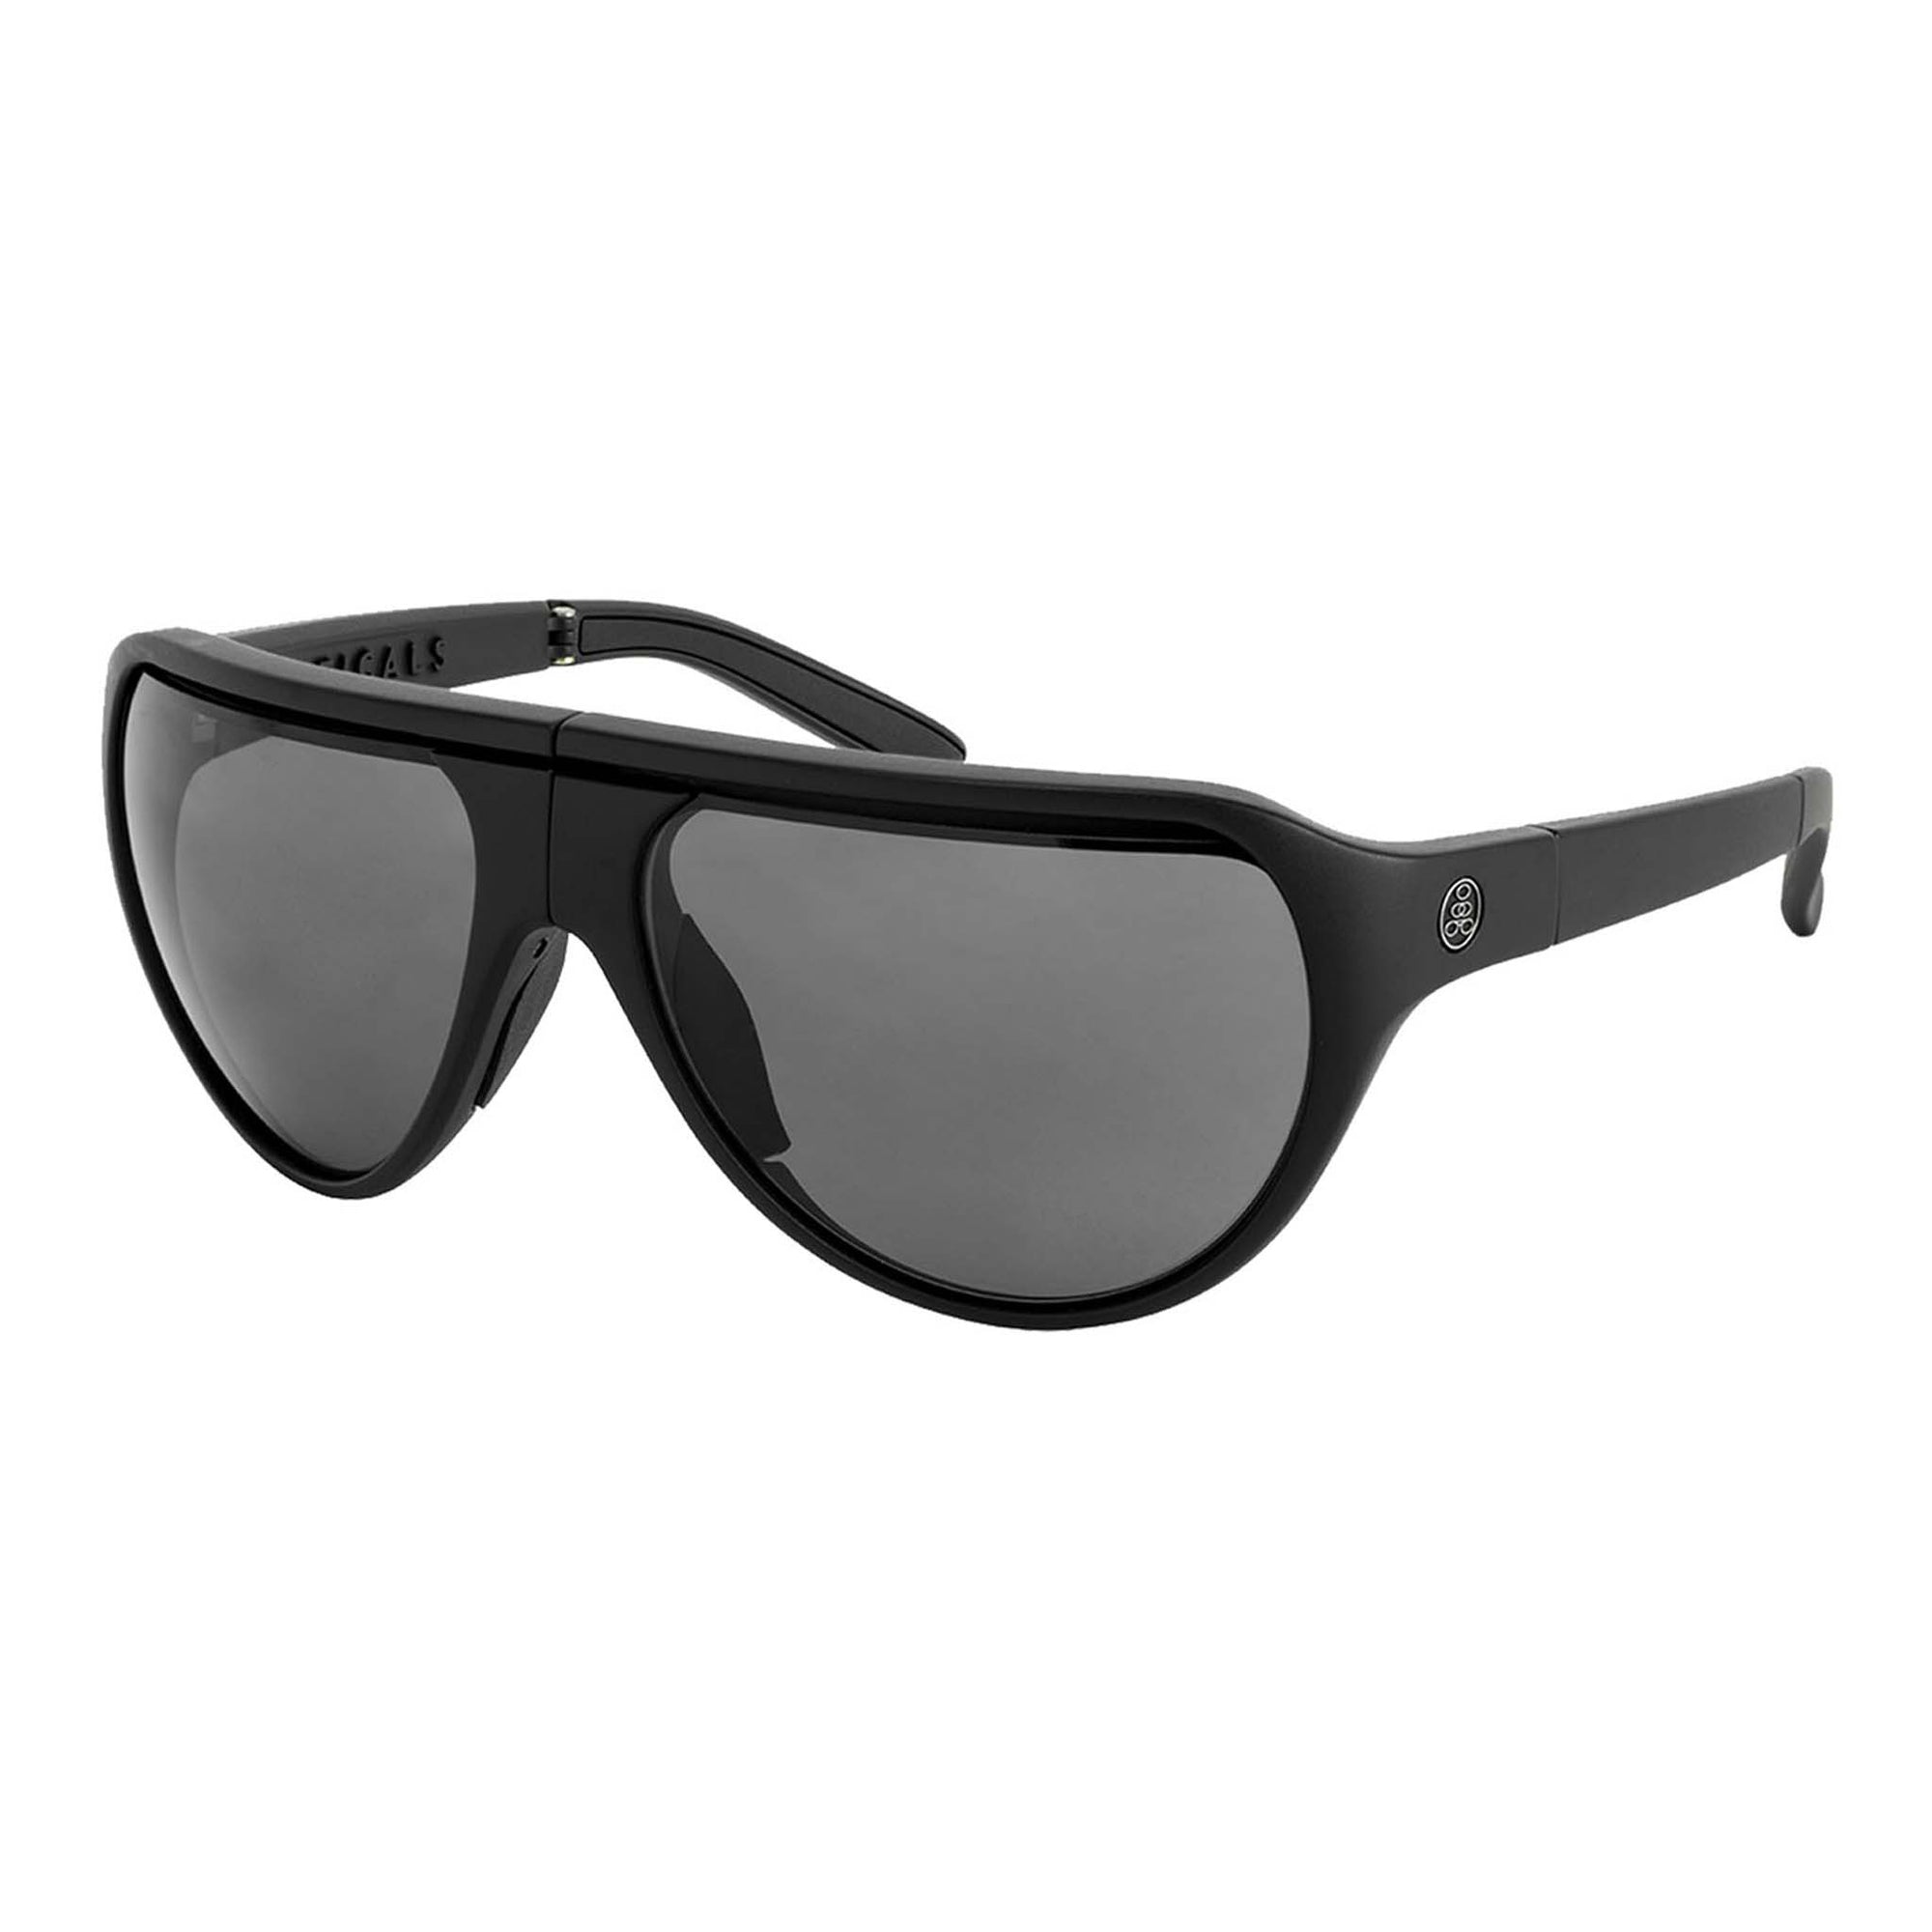 Popticals, Premium Compact Sunglasses, PopAir, 300010-BMGS, Standard Sunglasses, Matte Black Frame, Gray Lenses, Glam View